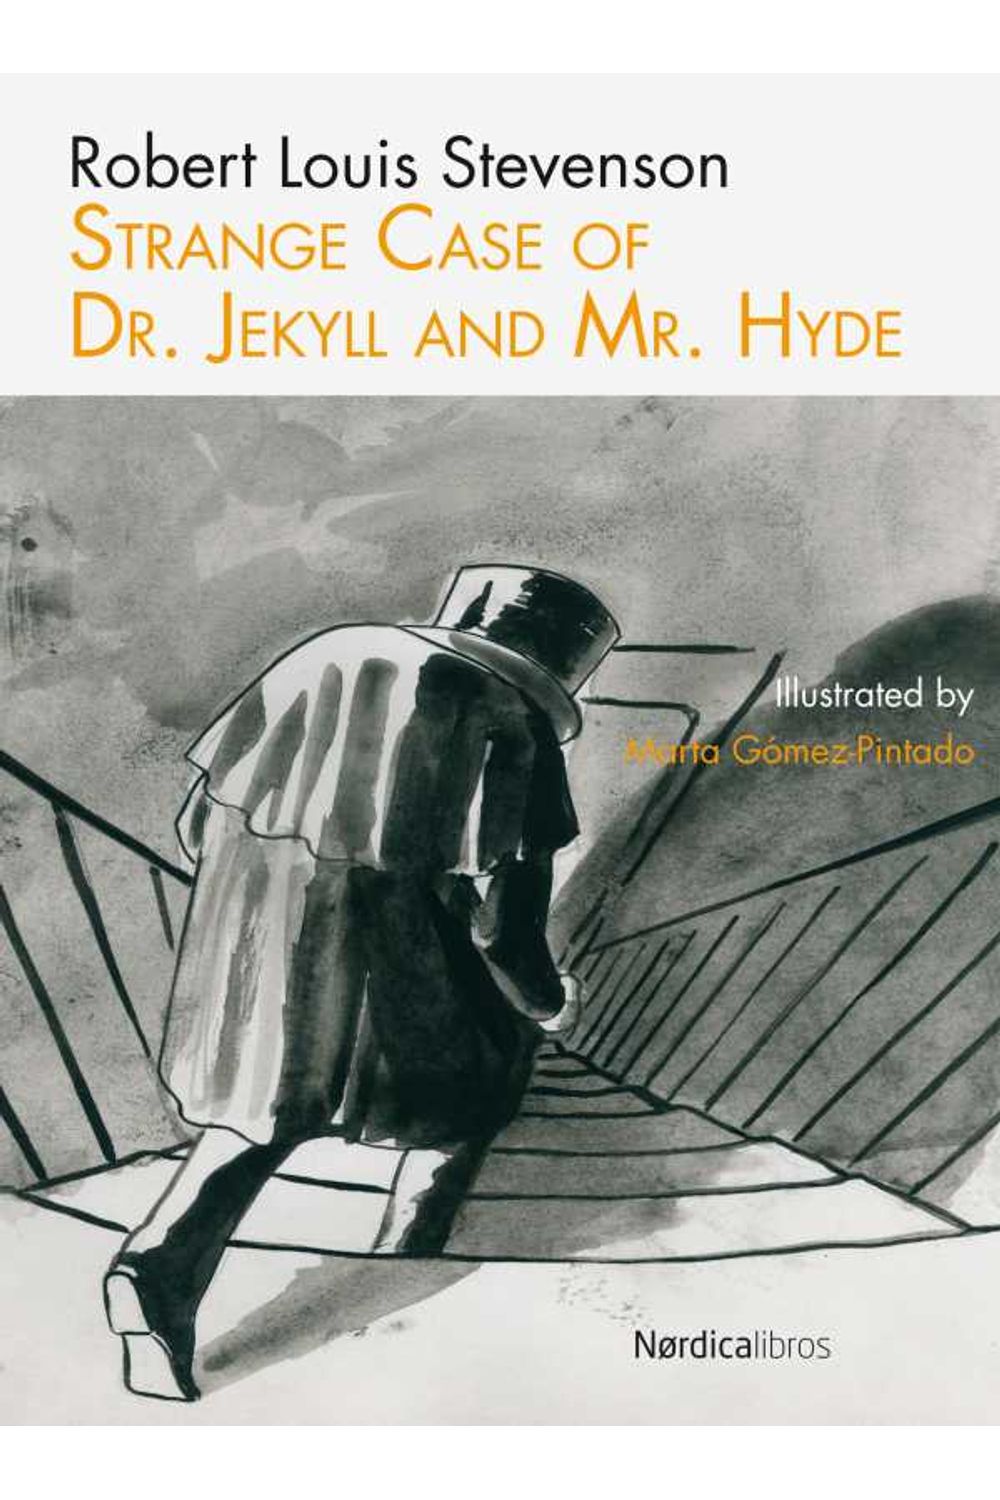 bw-strange-case-of-dr-jekyll-and-mr-hyde-nrdica-libros-9788492683758